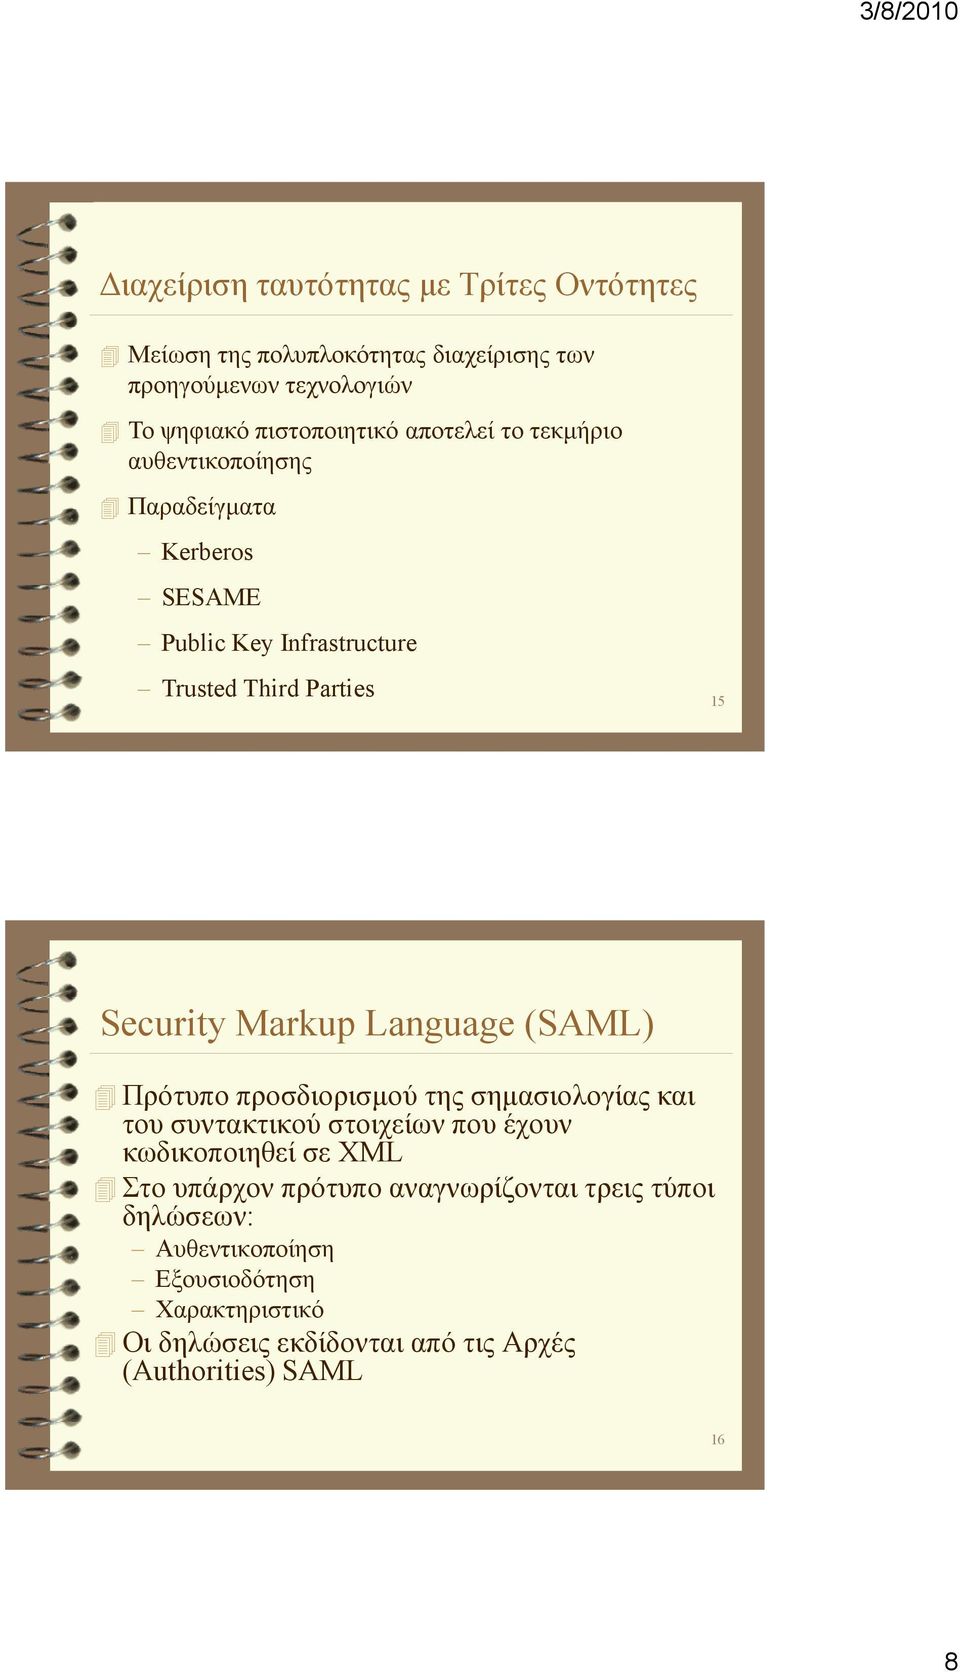 Language (SAML) Πρότυπο προσδιορισµού της σηµασιολογίας και του συντακτικού στοιχείων που έχουν κωδικοποιηθεί σε XML Στο υπάρχον πρότυπο